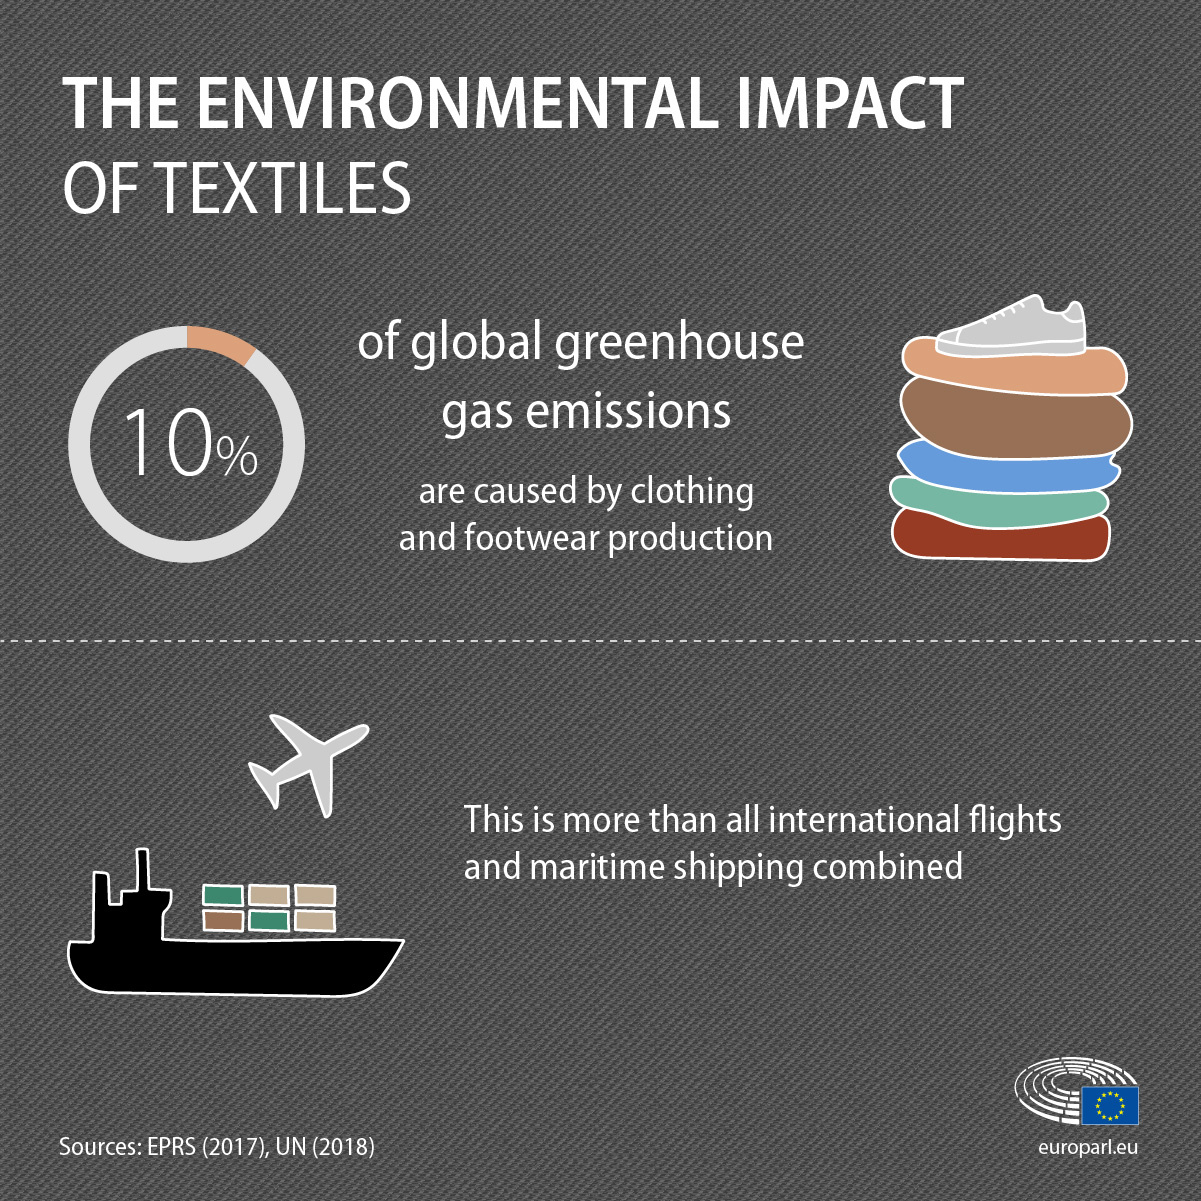 Image: The Environmental Impact of Textiles